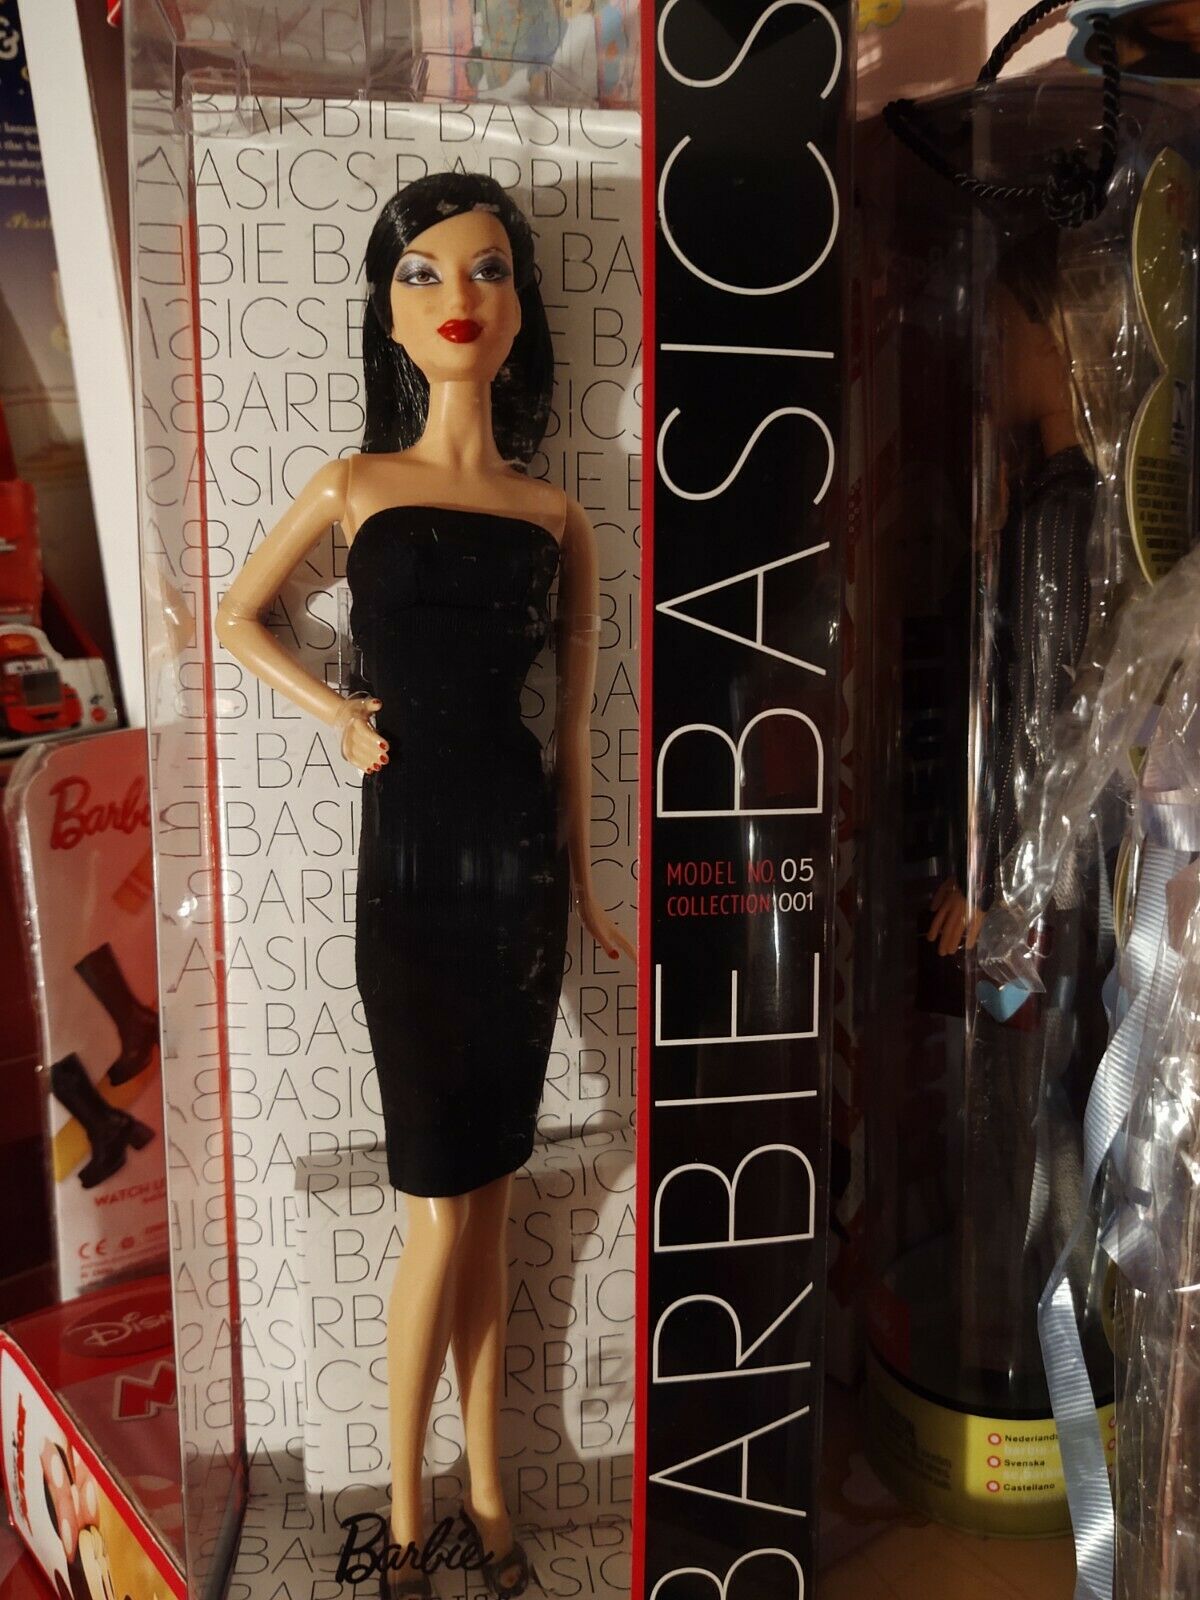 2009 Barbie Basics Model 05 Collection 001 Black Label Doll New